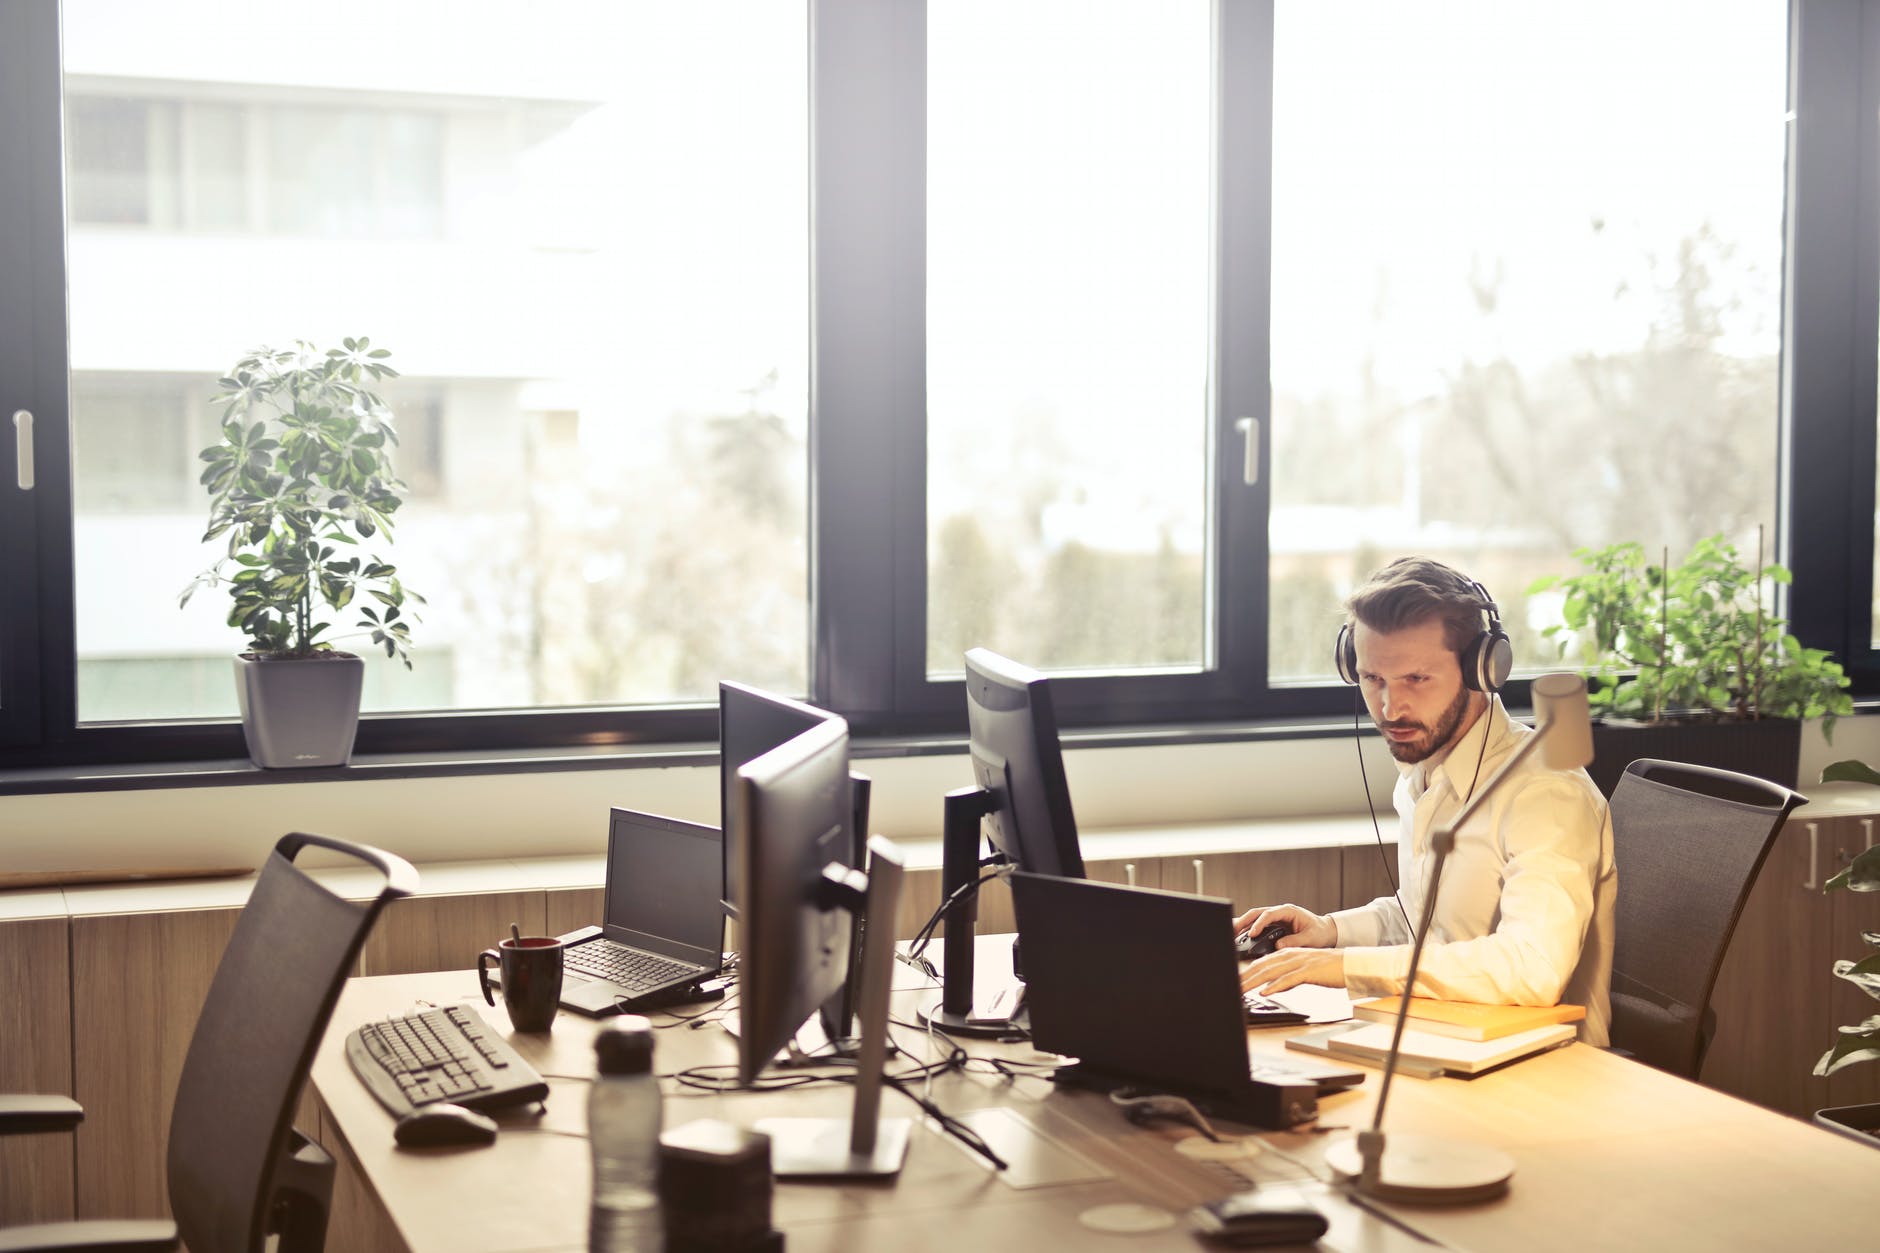 Man wearing headphones working on laptop at desk in empty office